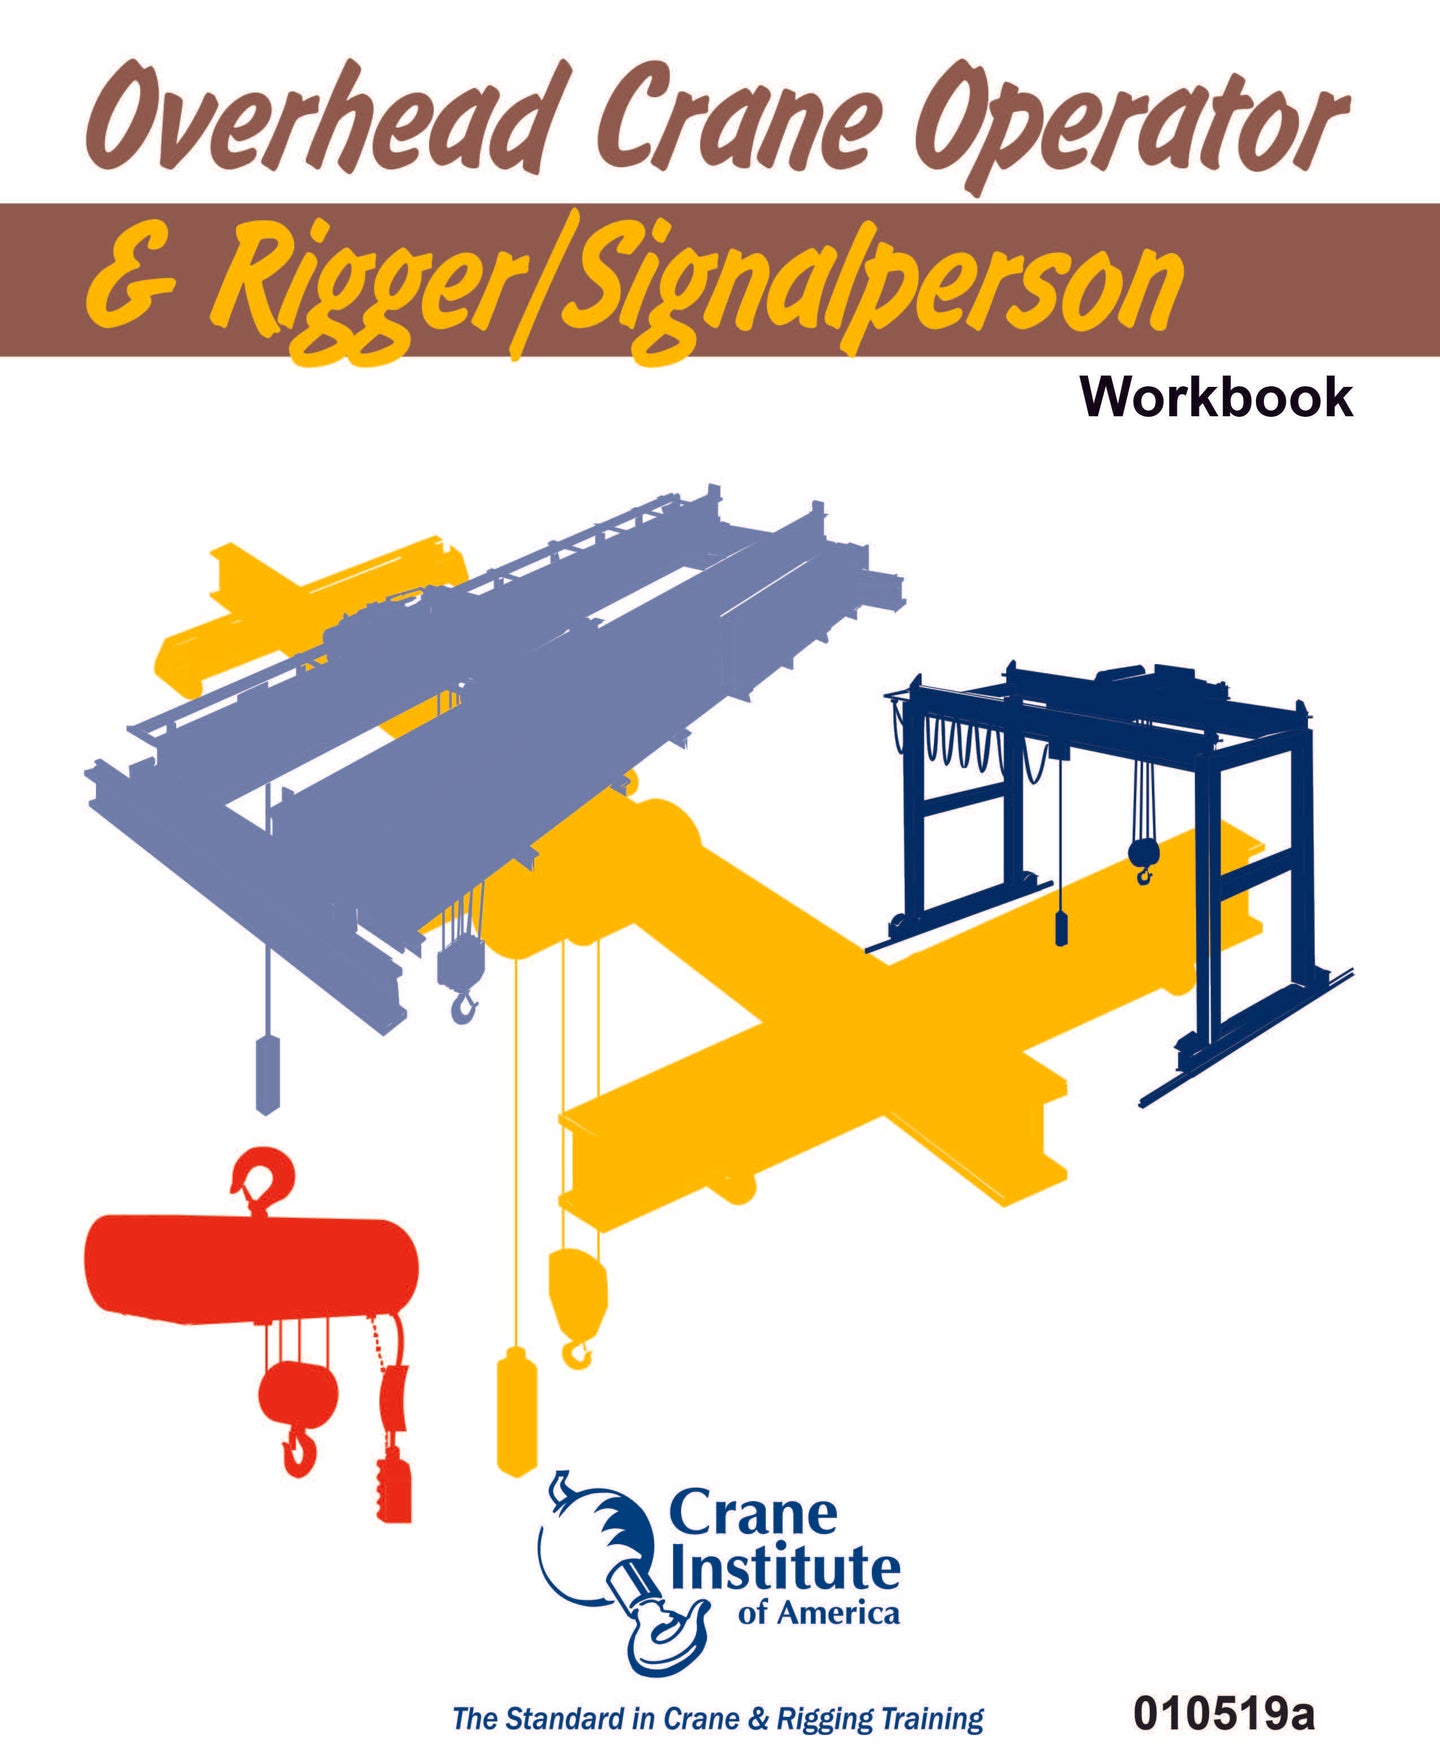 Overhead Crane Operator / Rigger Signalperson Workbook